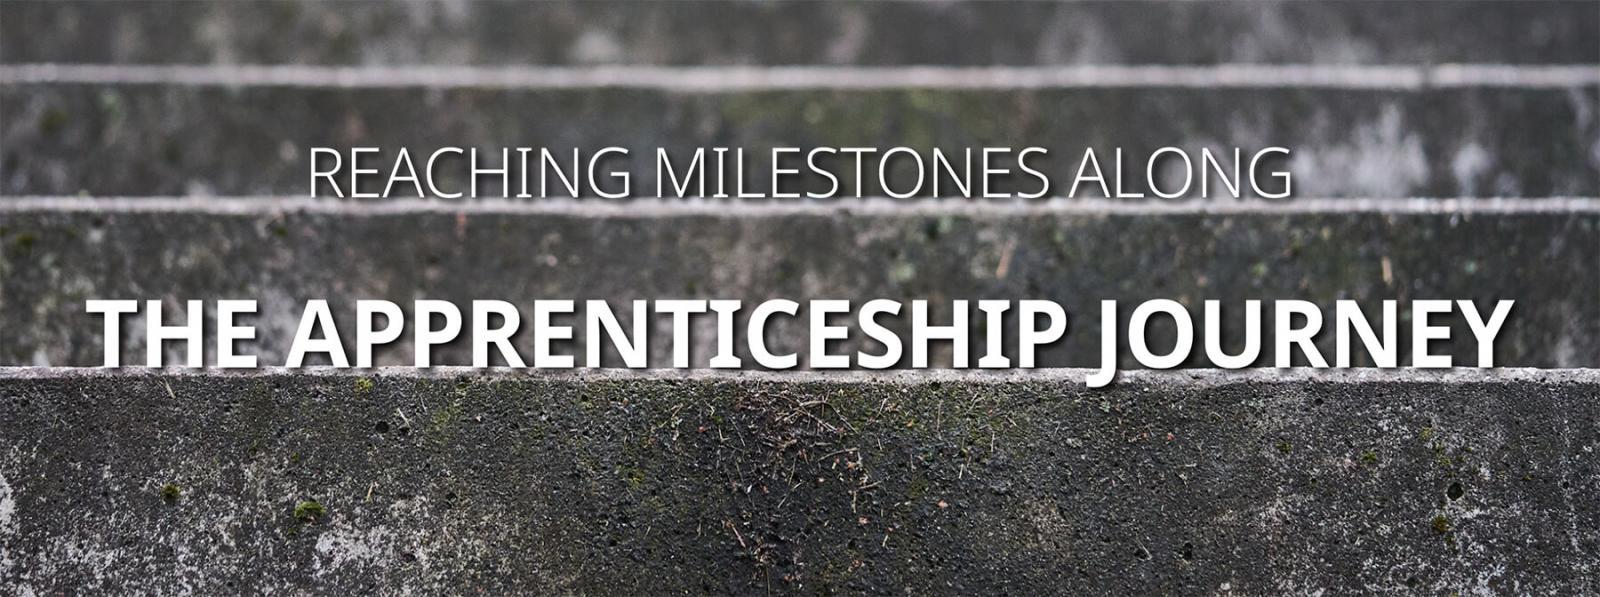 Reaching milestones along the apprenticeship journey